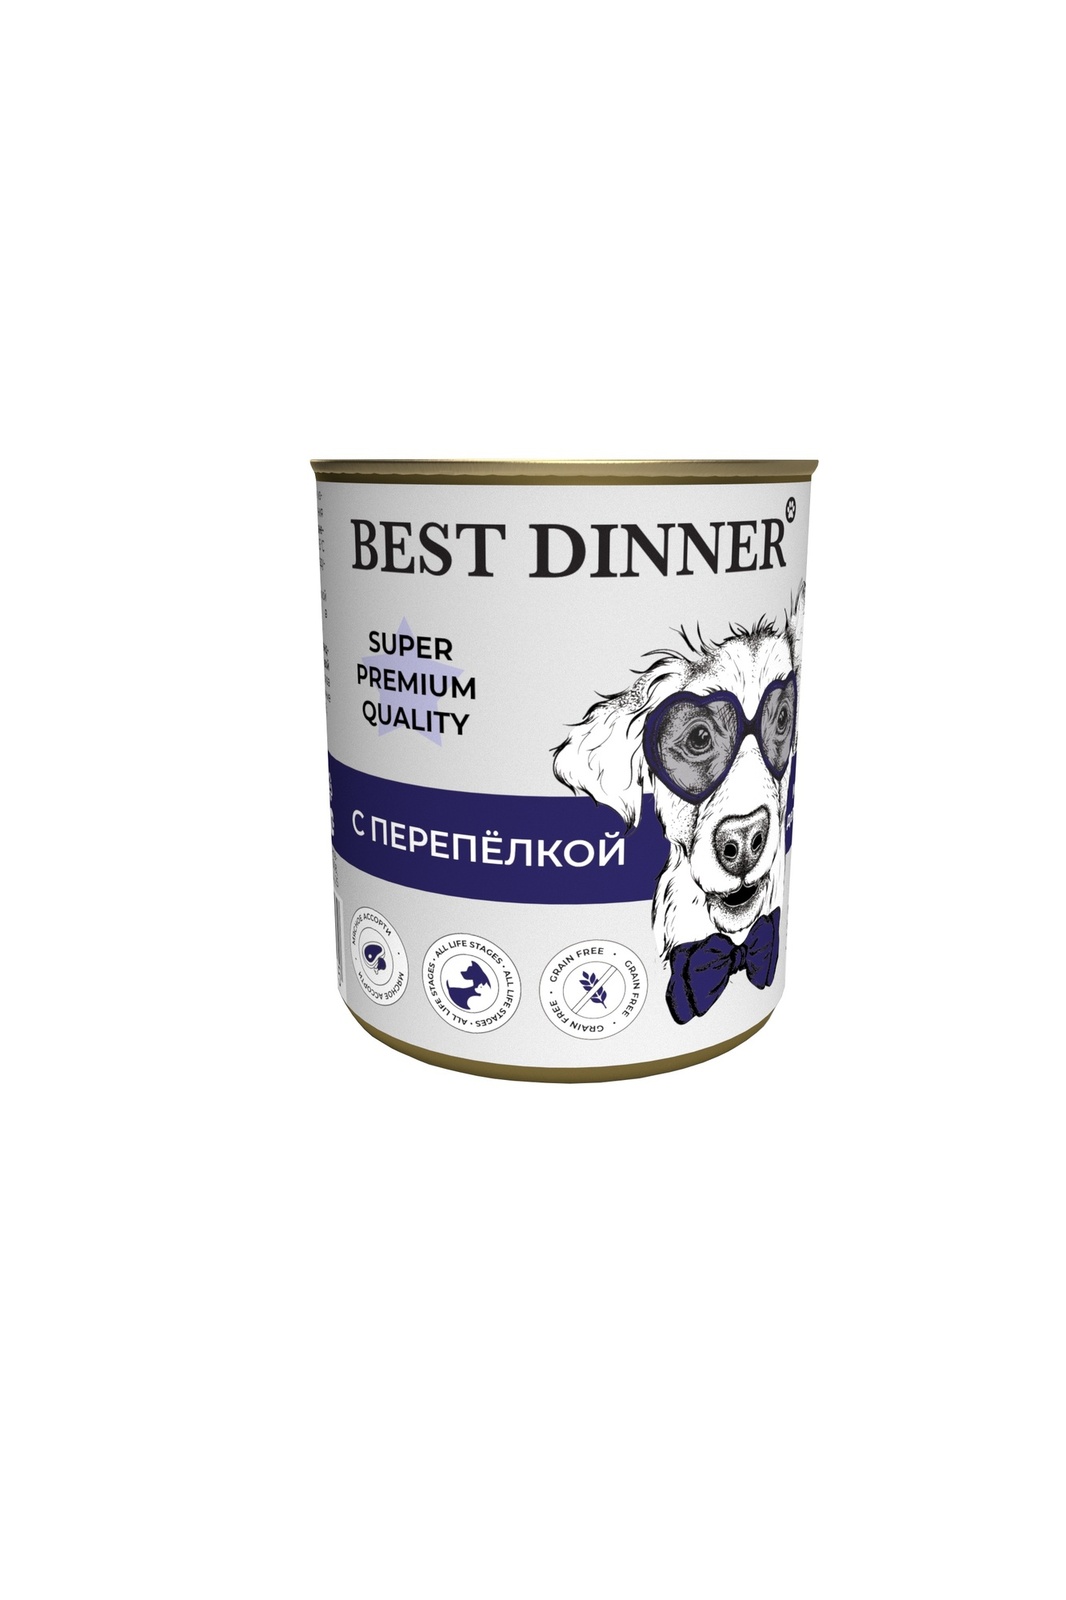 Best Dinner Best Dinner консервы для собак Super Premium С перепелкой (340 г) best dinner best dinner консервы premium меню 4 с телятиной и овощами 340 г